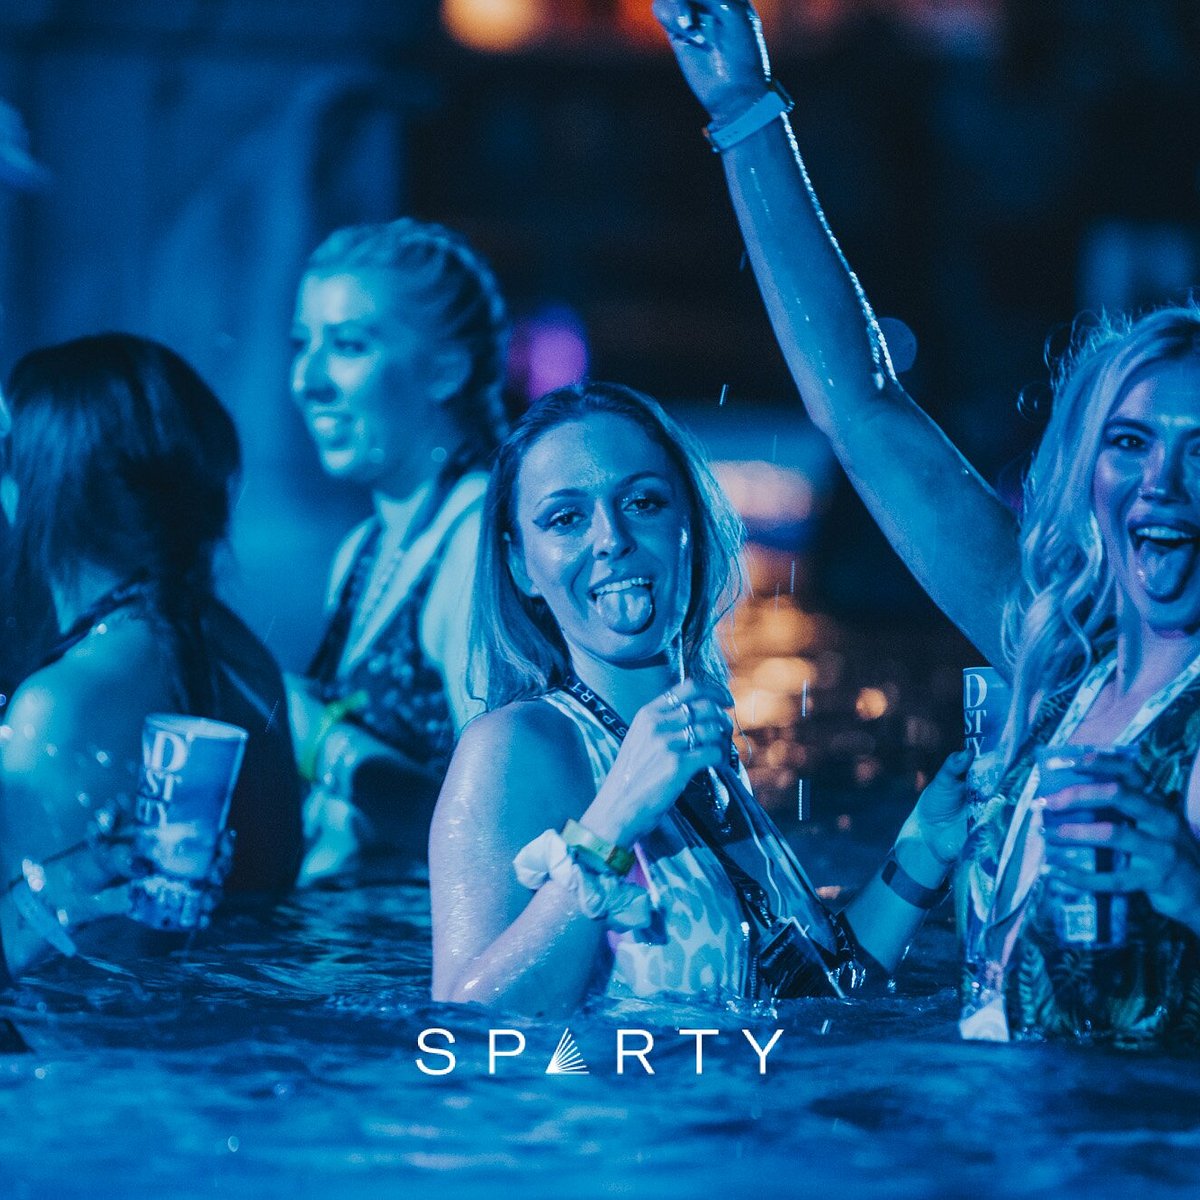 SPARTY - Széchenyi Bath Party, Будапешт: лучшие советы перед посещением -  Tripadvisor